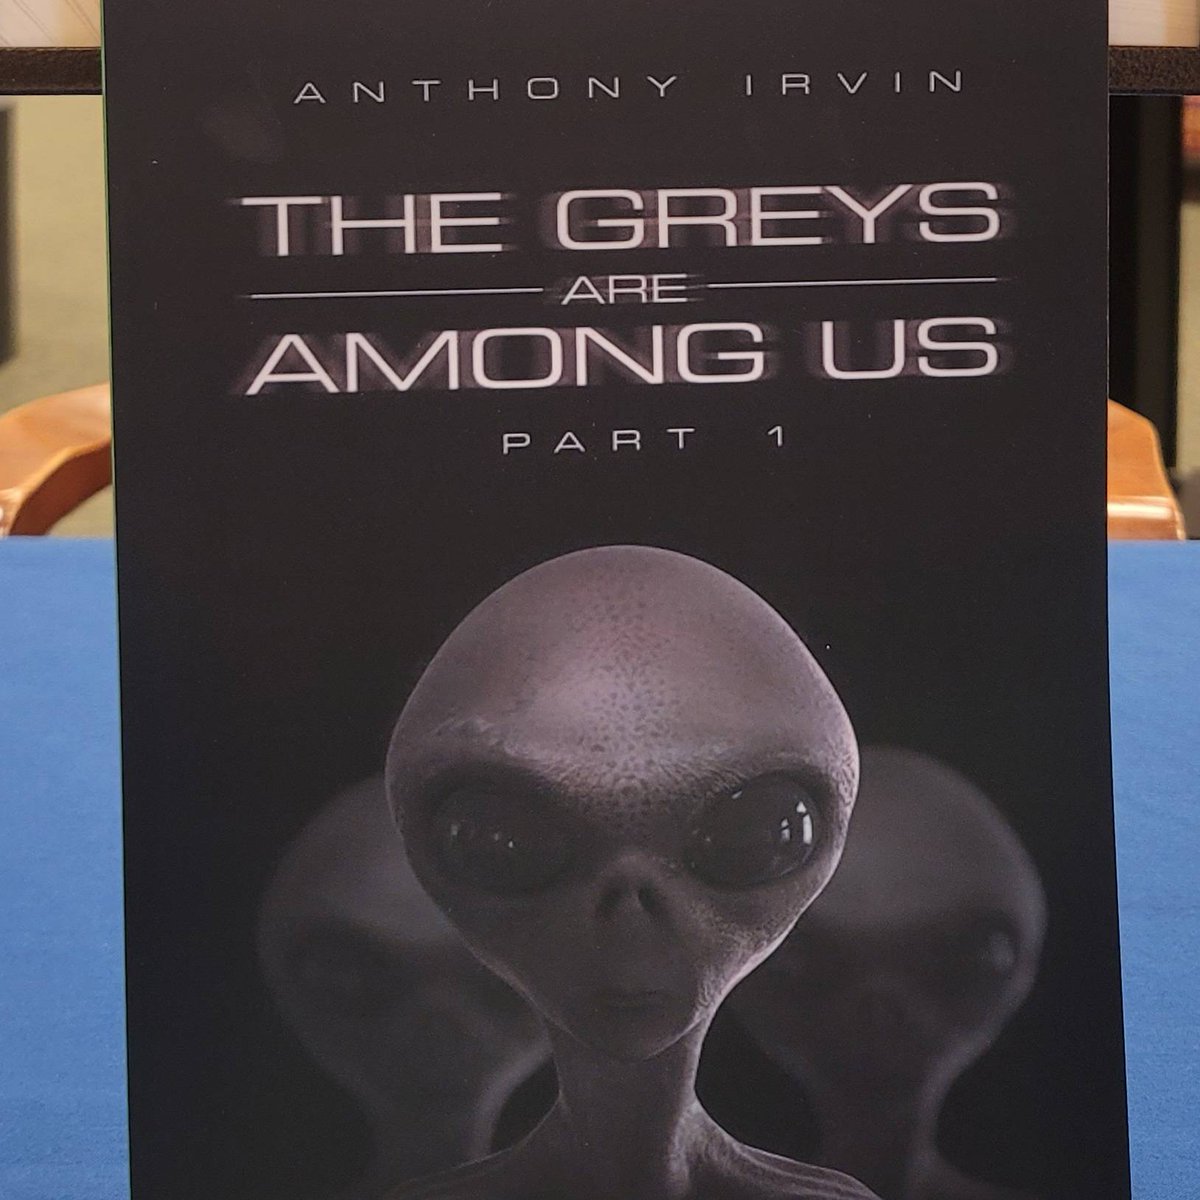 Tonight at 1pm, author Anthony Irvin will be signing his book The Greys Are Among Us

#bnanchorage #localauthor #bnalaska #alaskanauthor #bn #bnbuzz #barnesandnoble